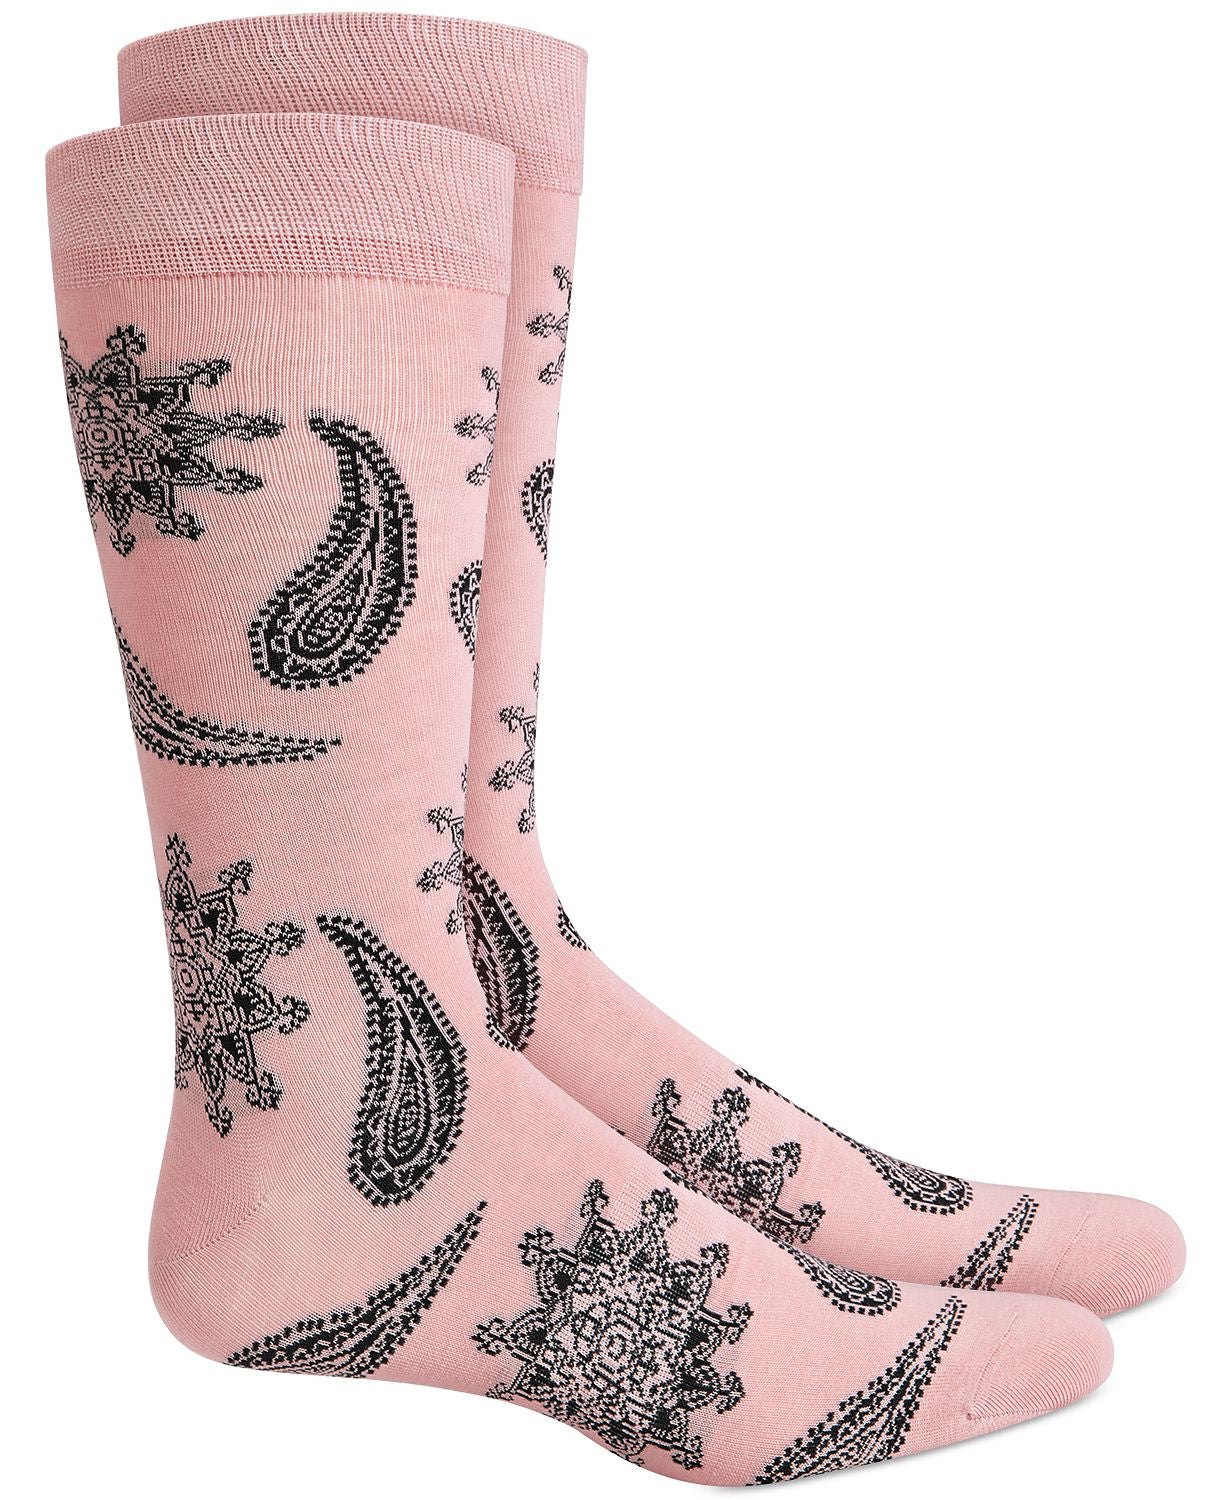 BAR III Floral Paisley Socks Pink Grey